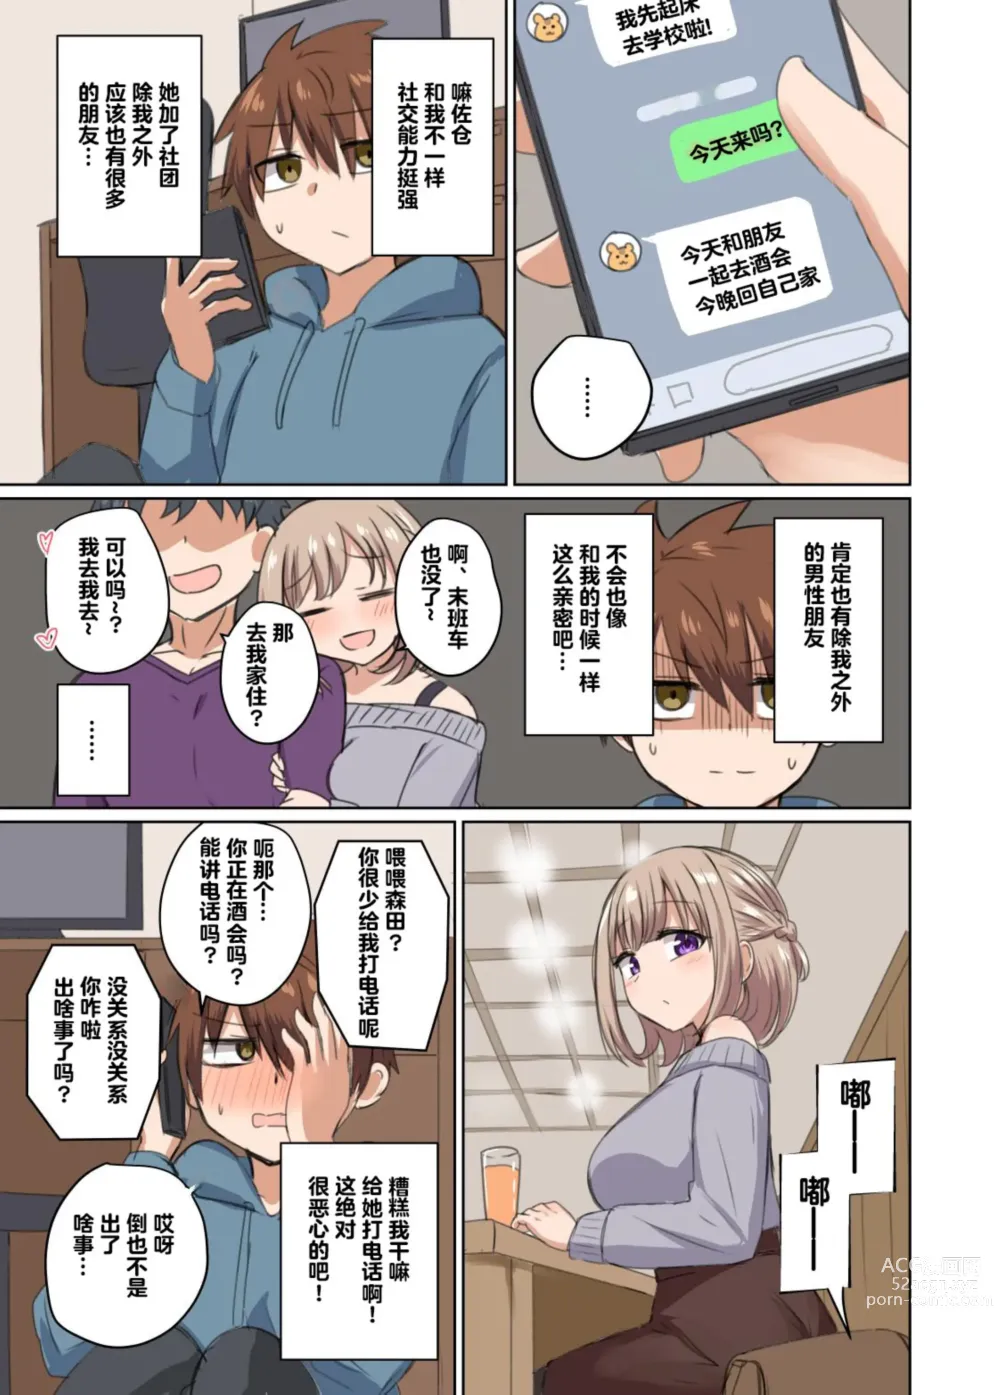 Page 4 of doujinshi 距离太近擦枪走火